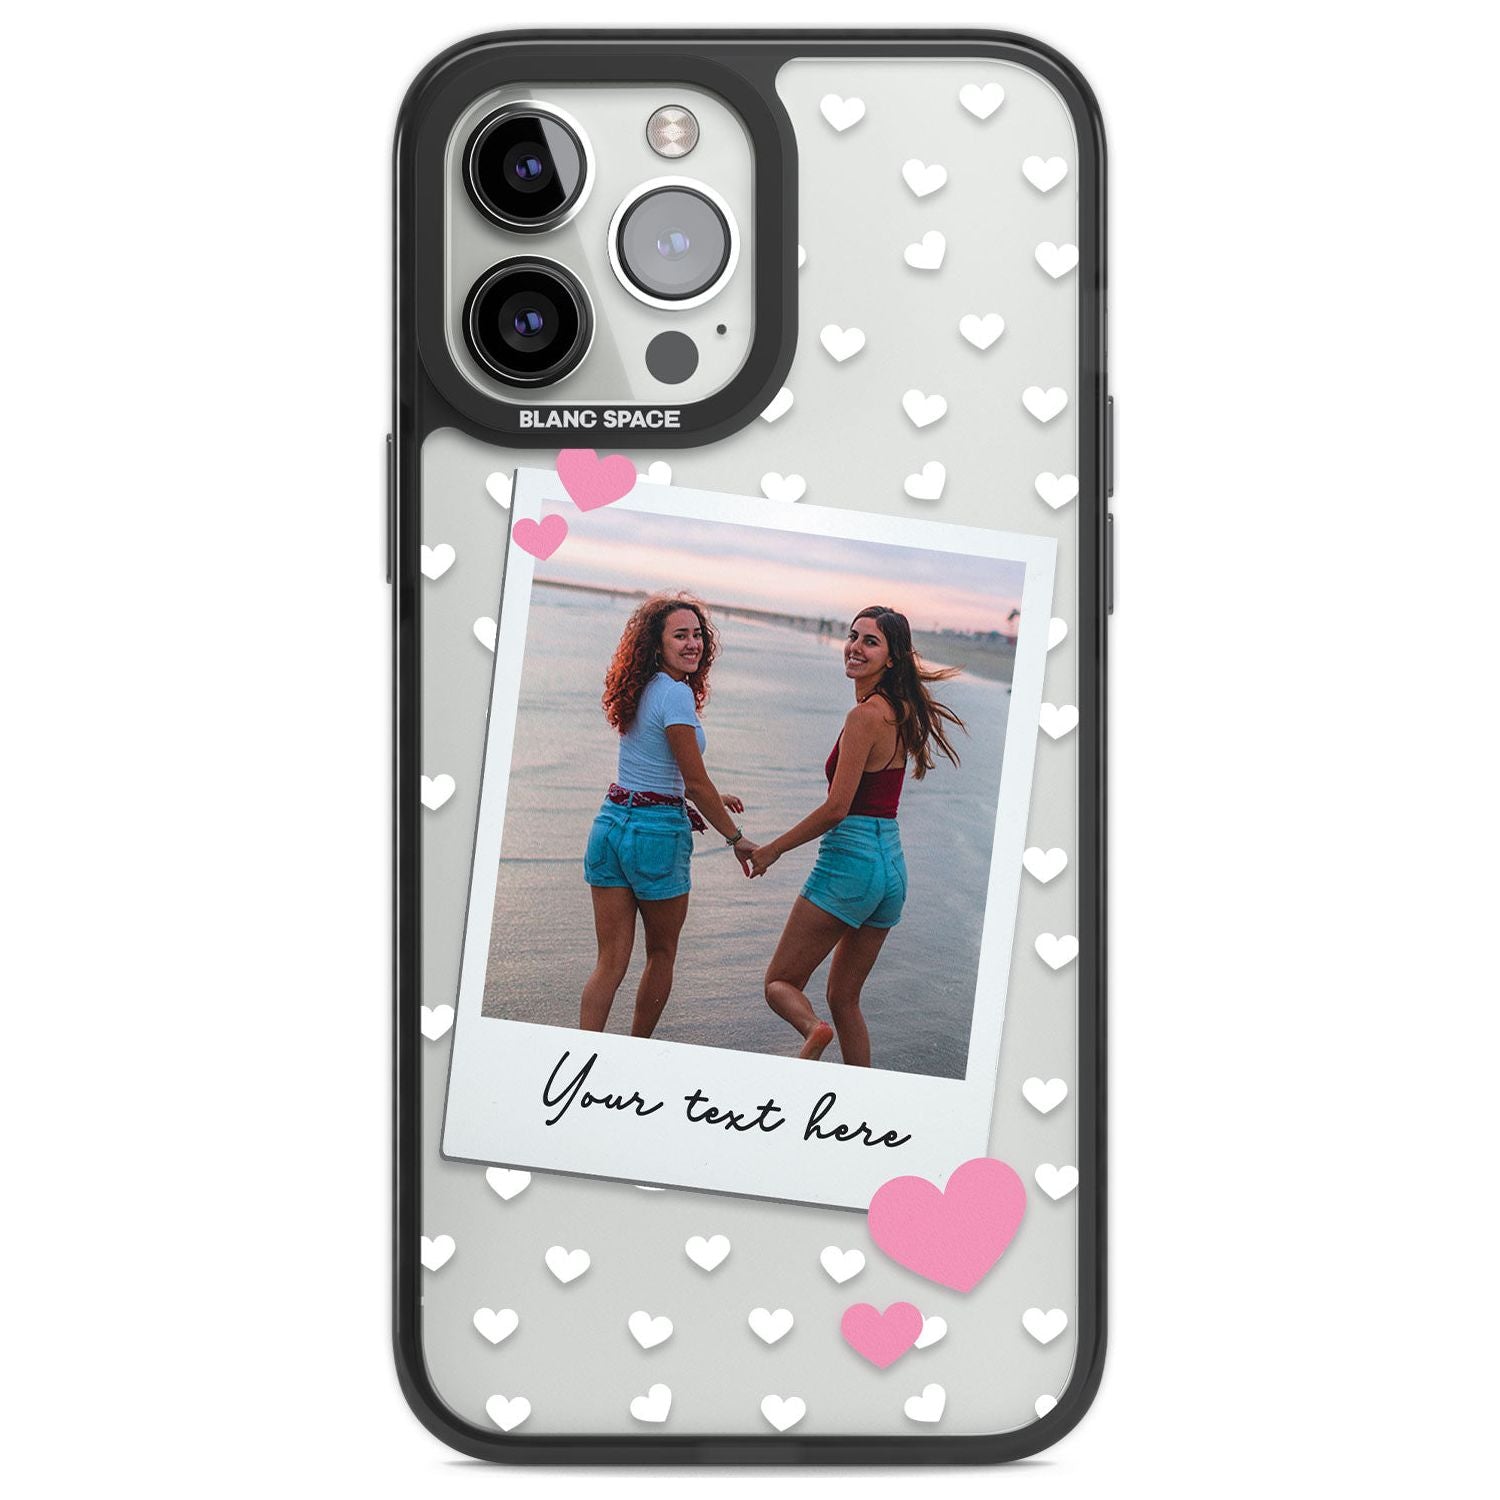 Personalised Instant Film & Hearts Photo Custom Phone Case iPhone 13 Pro Max / Black Impact Case,iPhone 14 Pro Max / Black Impact Case Blanc Space